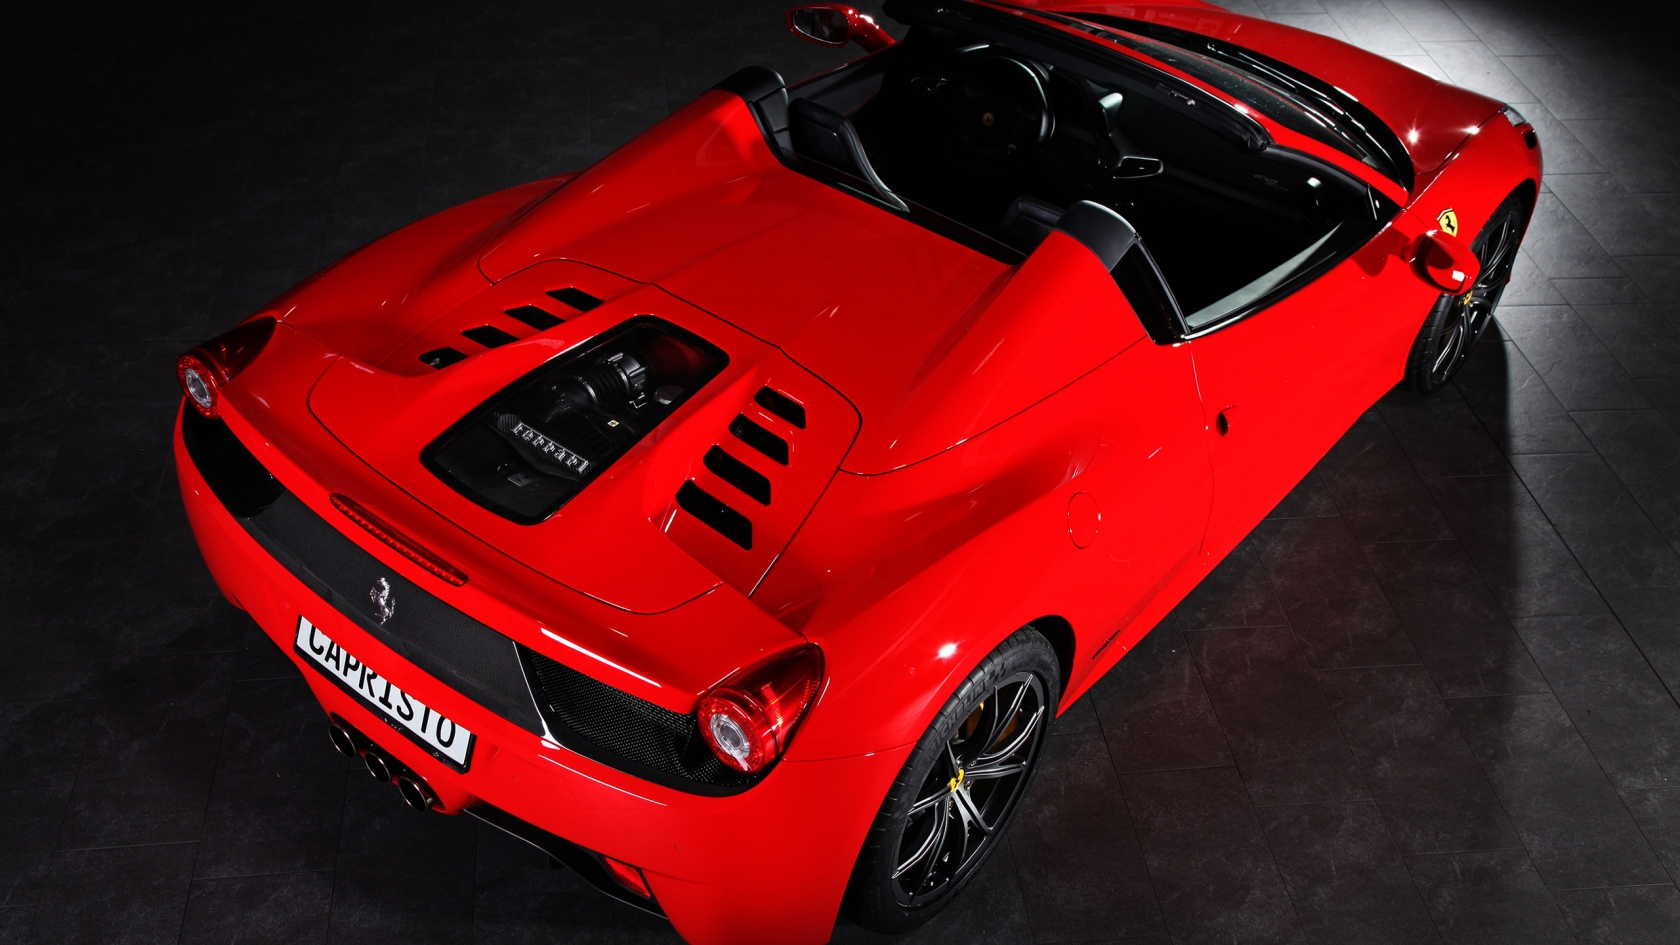 Capristo Ferrari 458 Spider for 1680 x 945 HDTV resolution